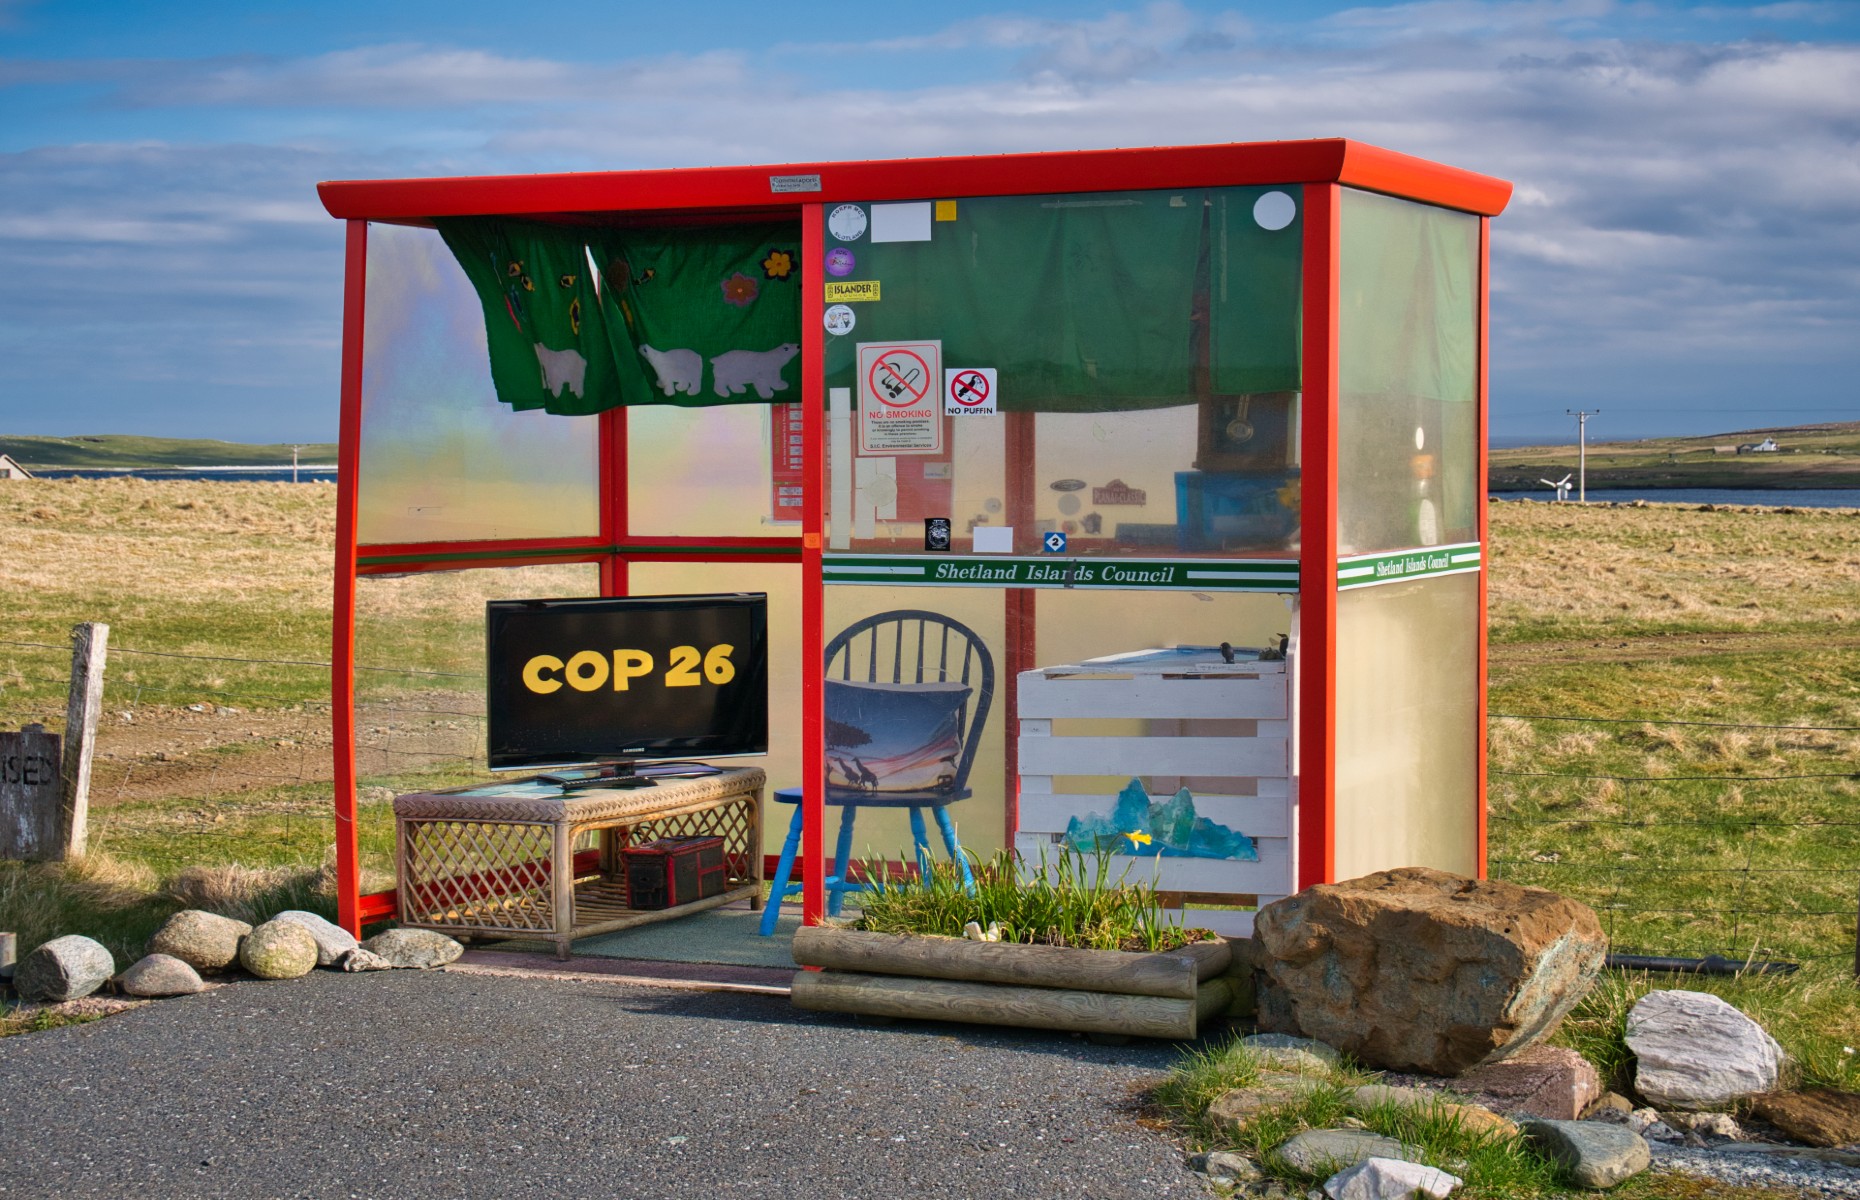 Award-winning bus shelter in Unst (Image: AlanMorris/Shutterstock) 